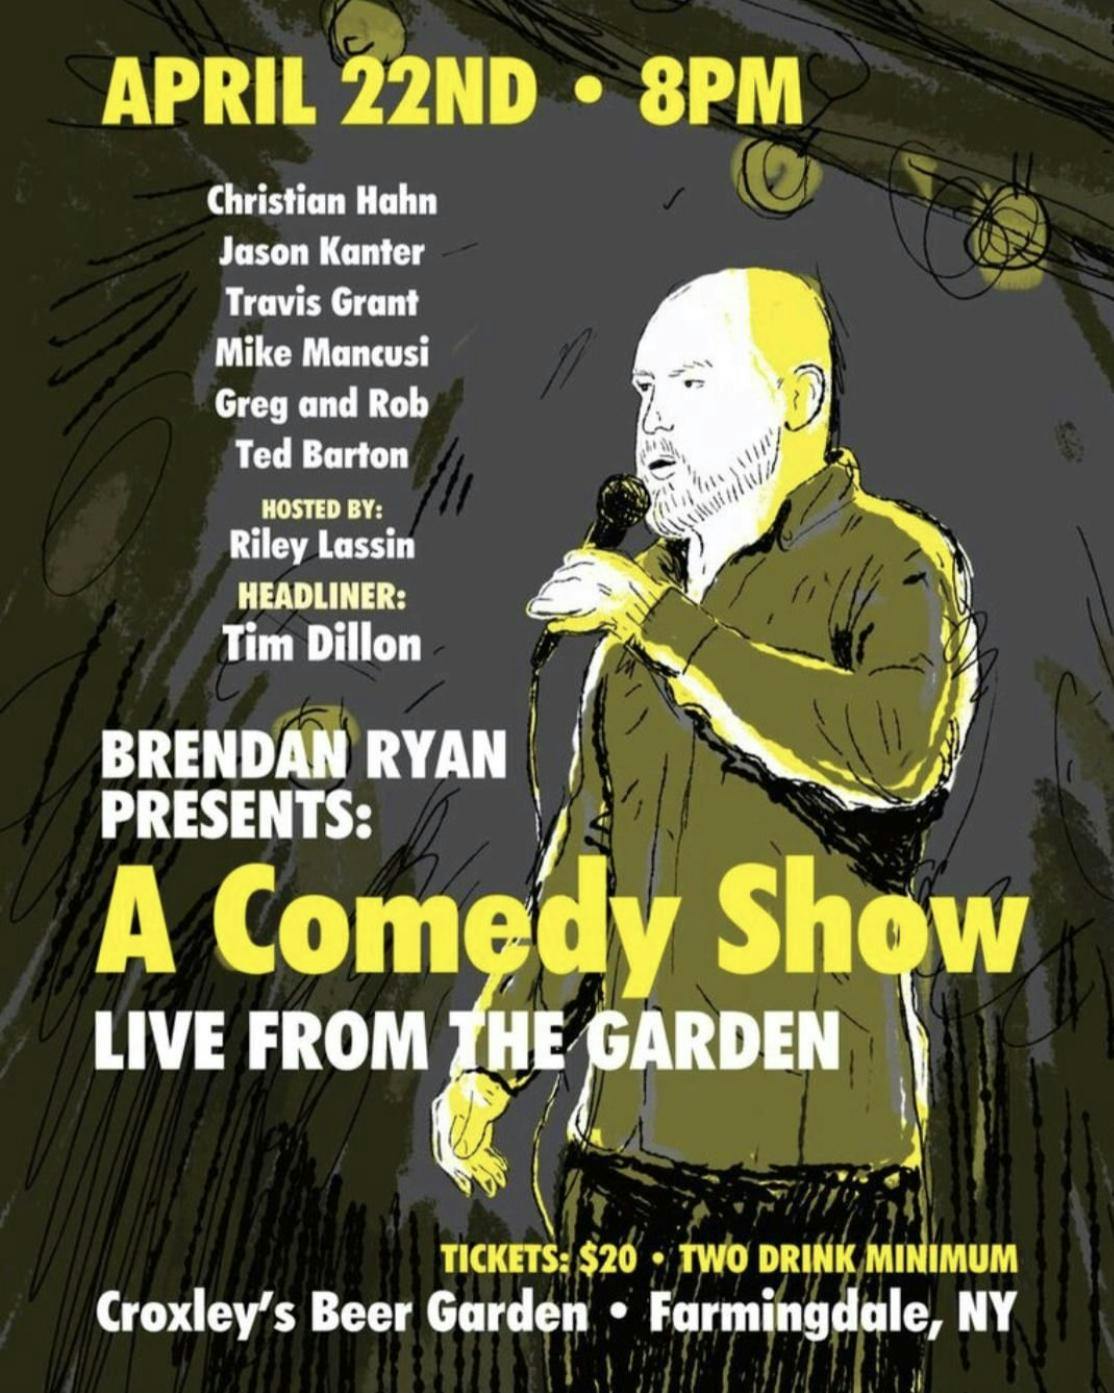 Brendan Ryan presents a comedy show! Live from the garden